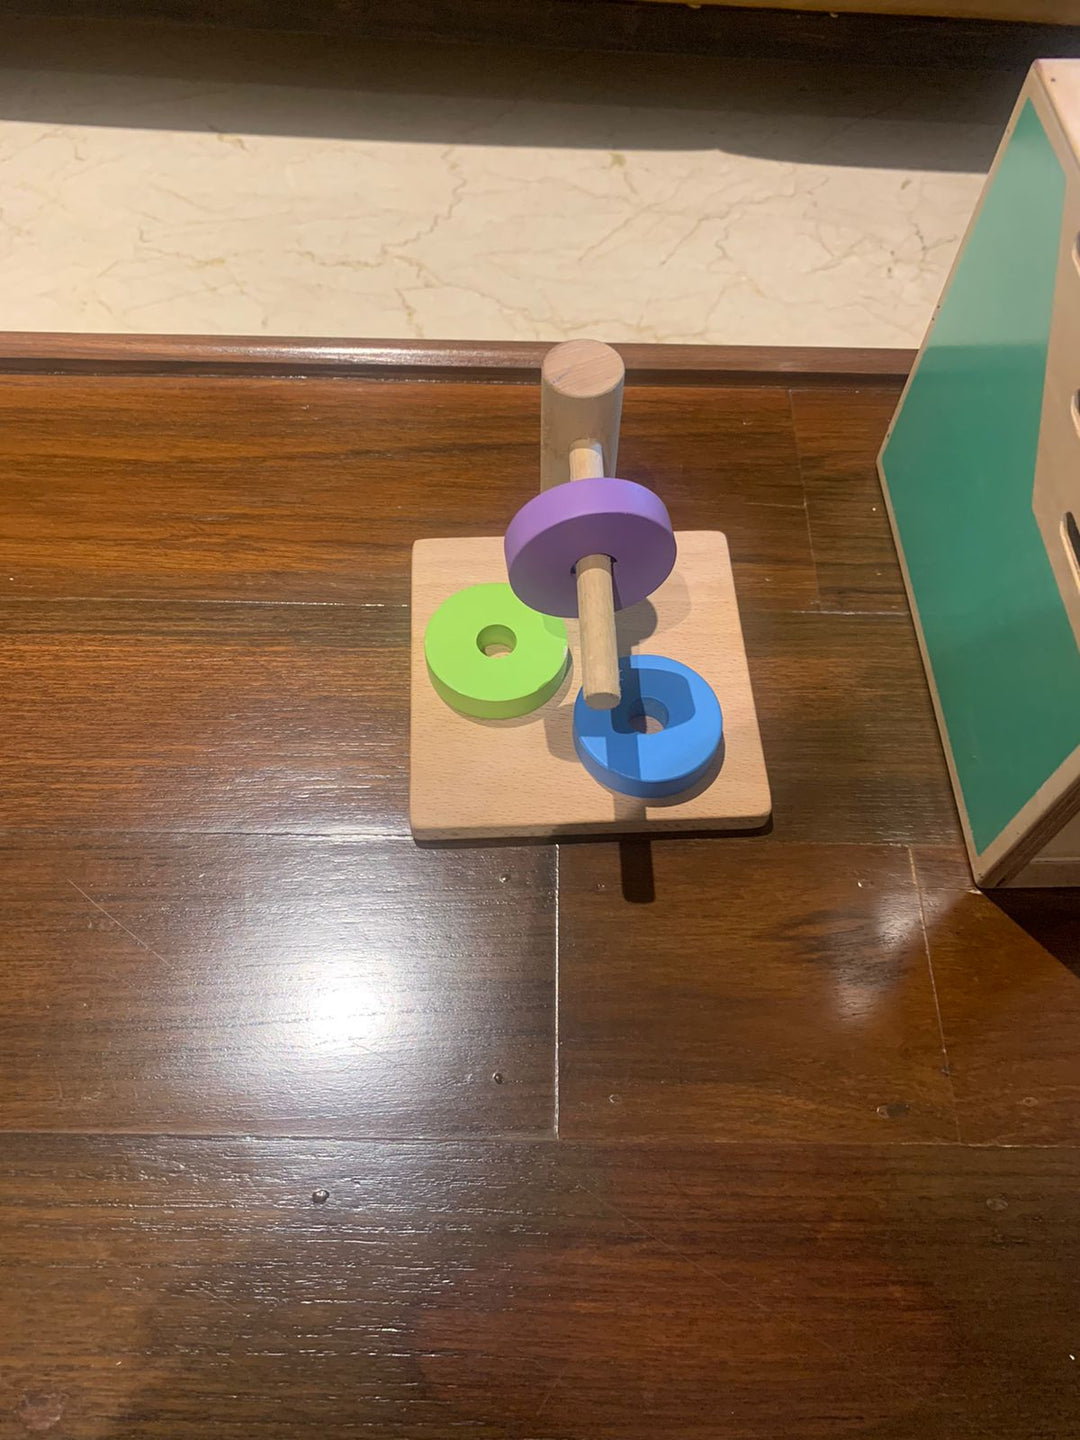 Set of 10 Montessori Toys